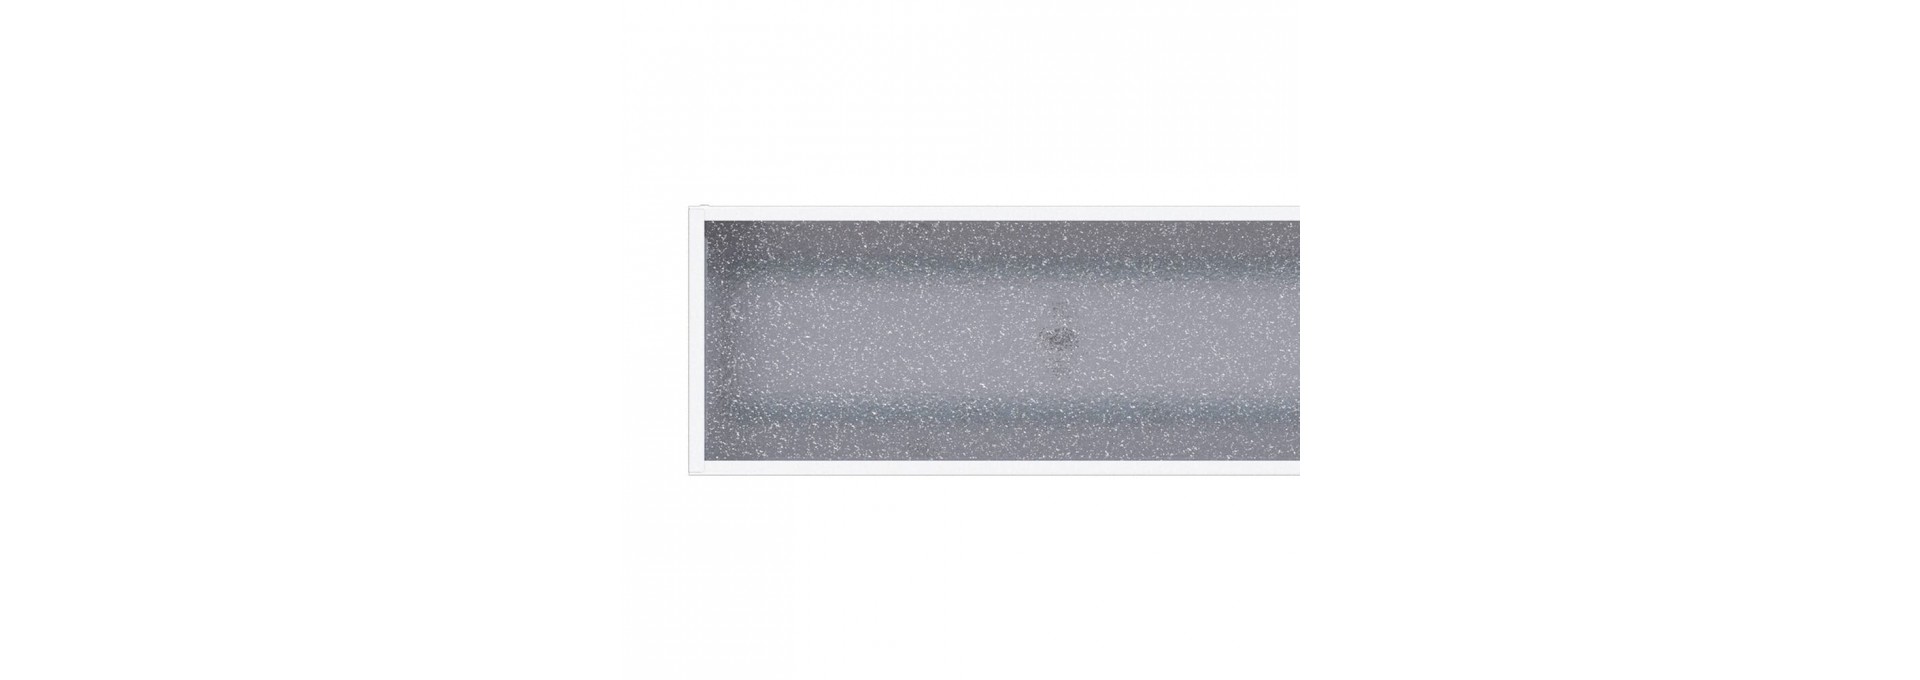 Линия 20 Эко 5000К Колотый лед 1195×180мм